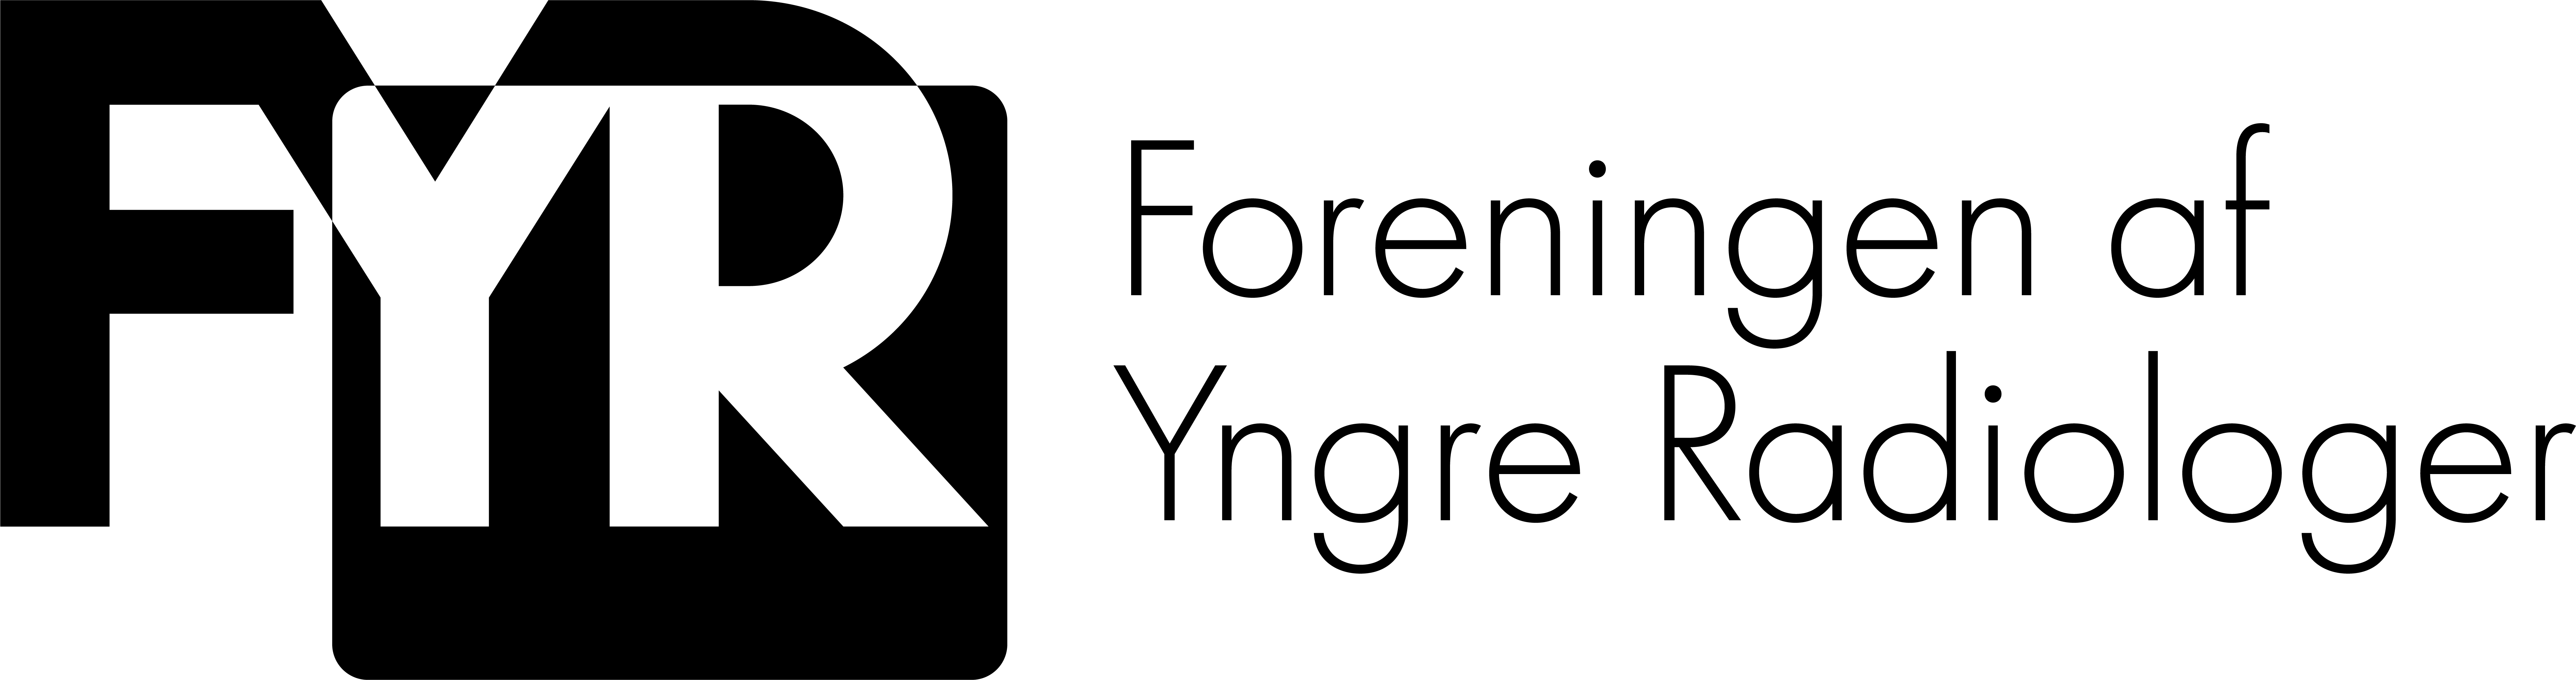 3 FYR Logo Full_Black Monotone